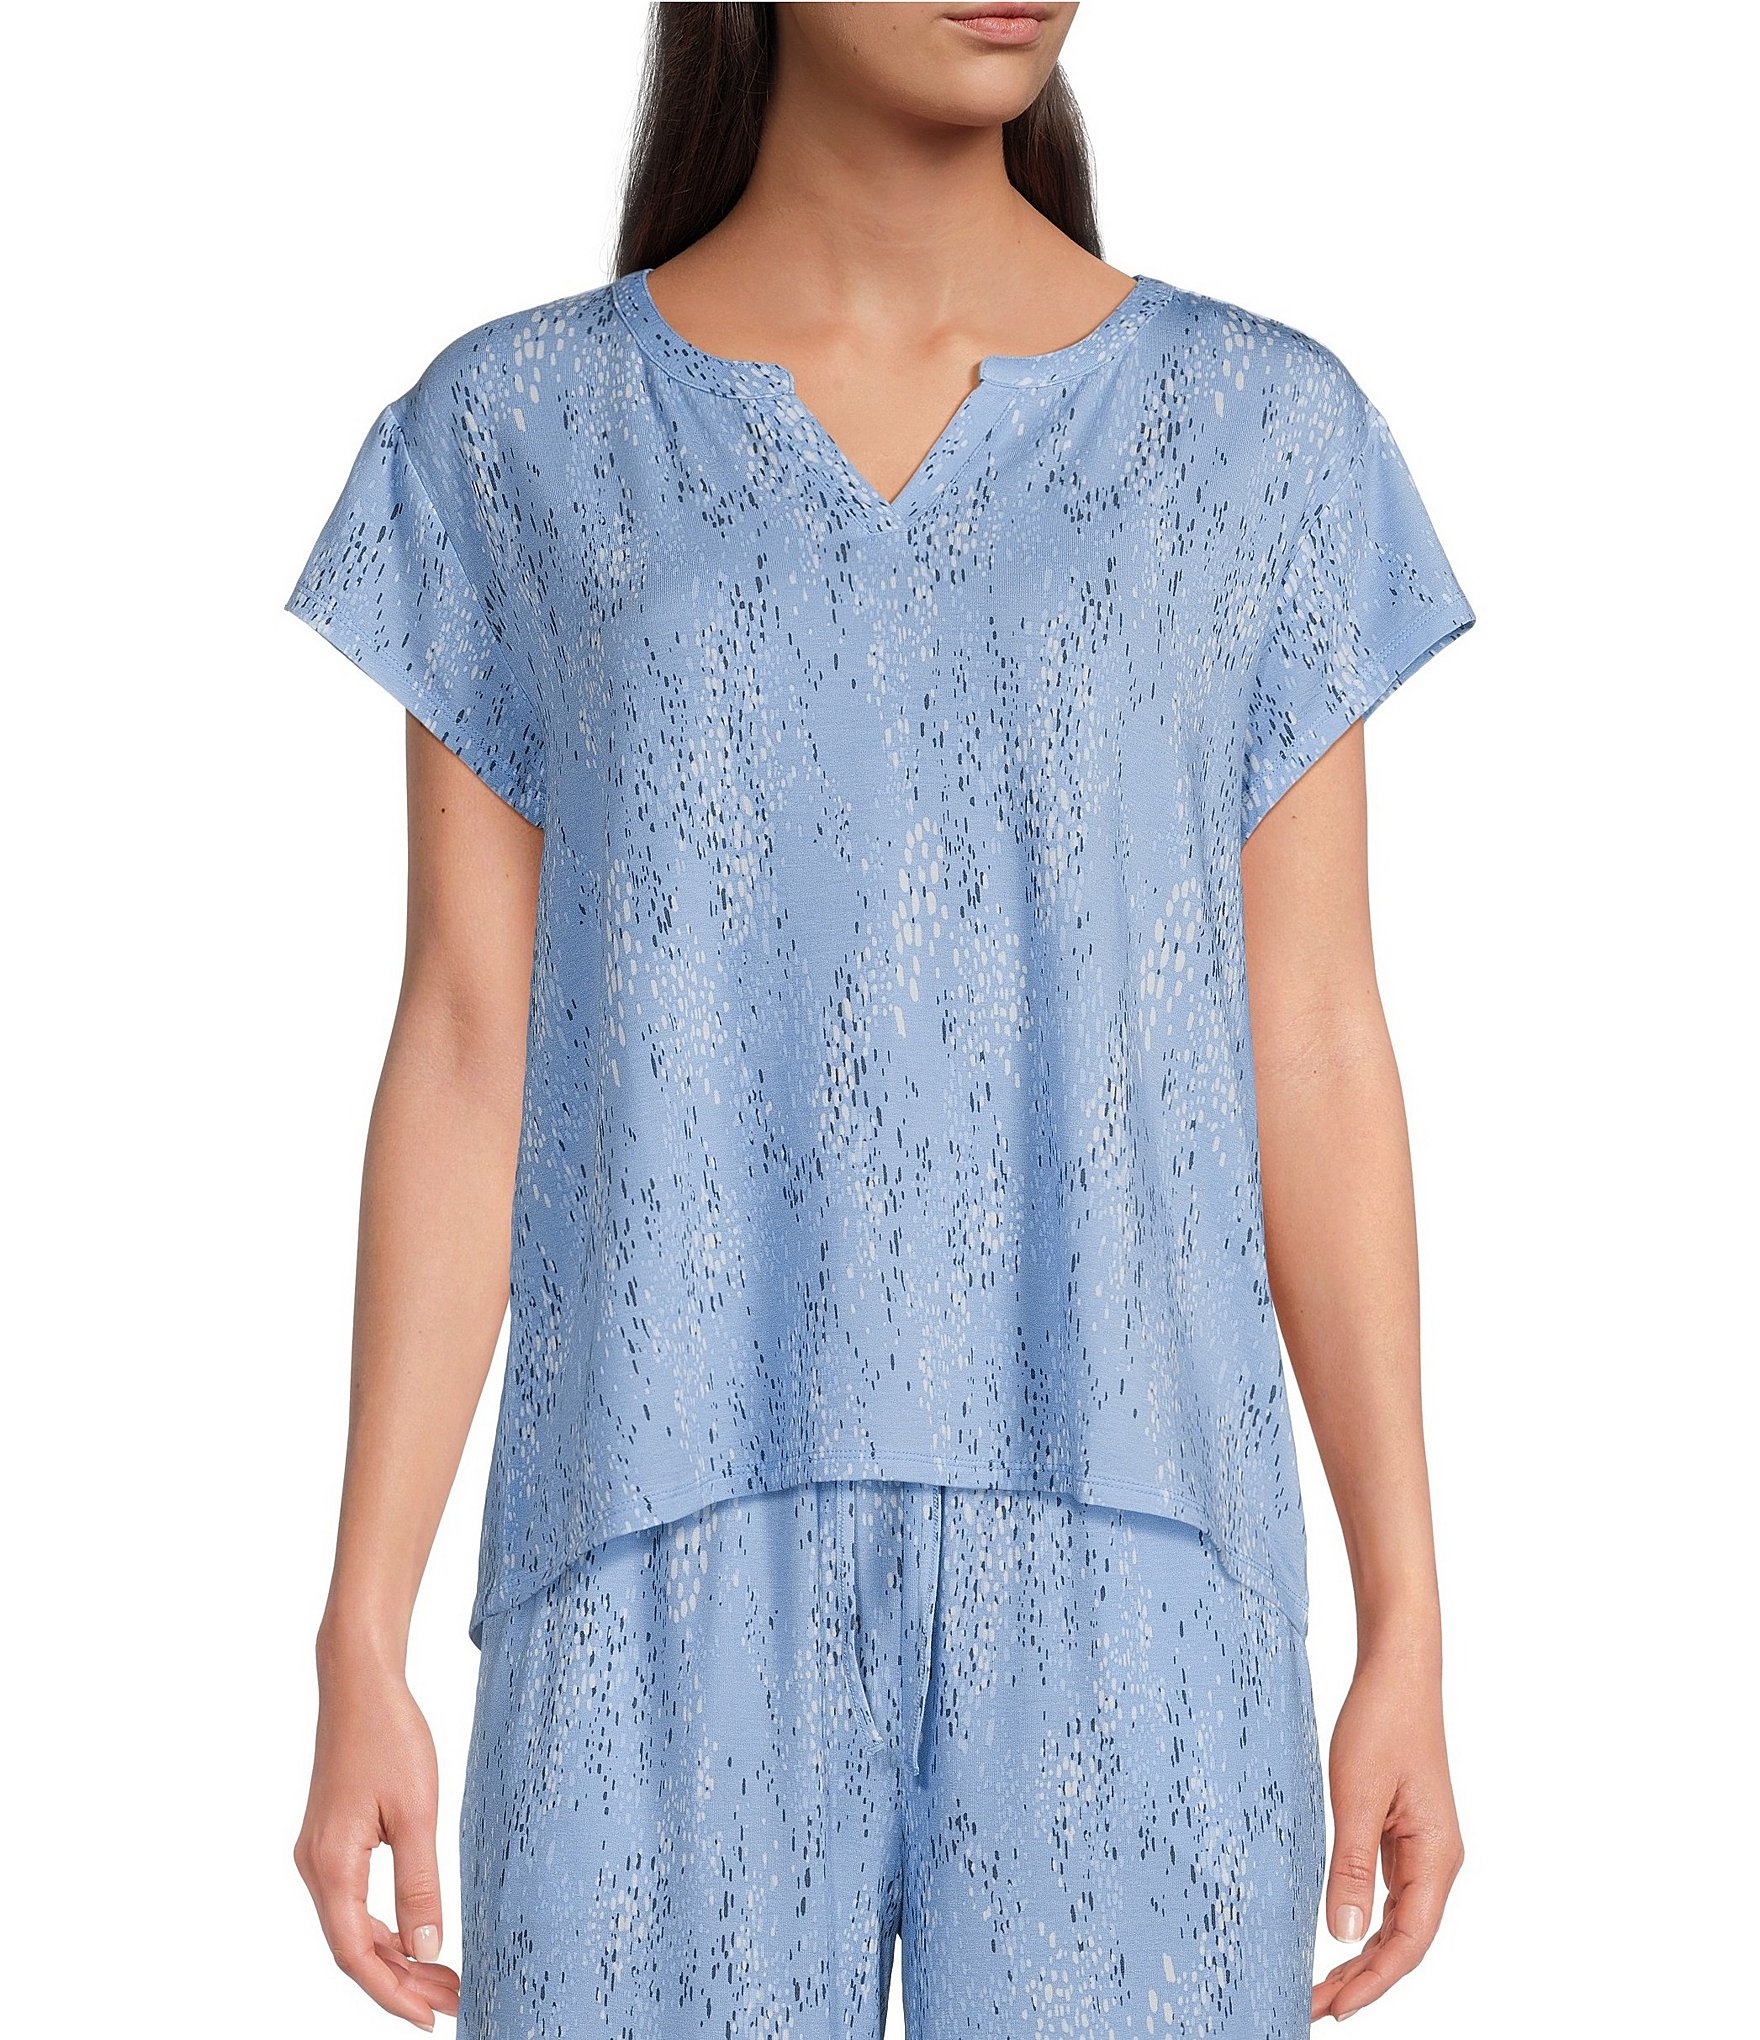 Cheap Women's Pajamas Sleeping Suits Round Neck Half Sleeve Shirt